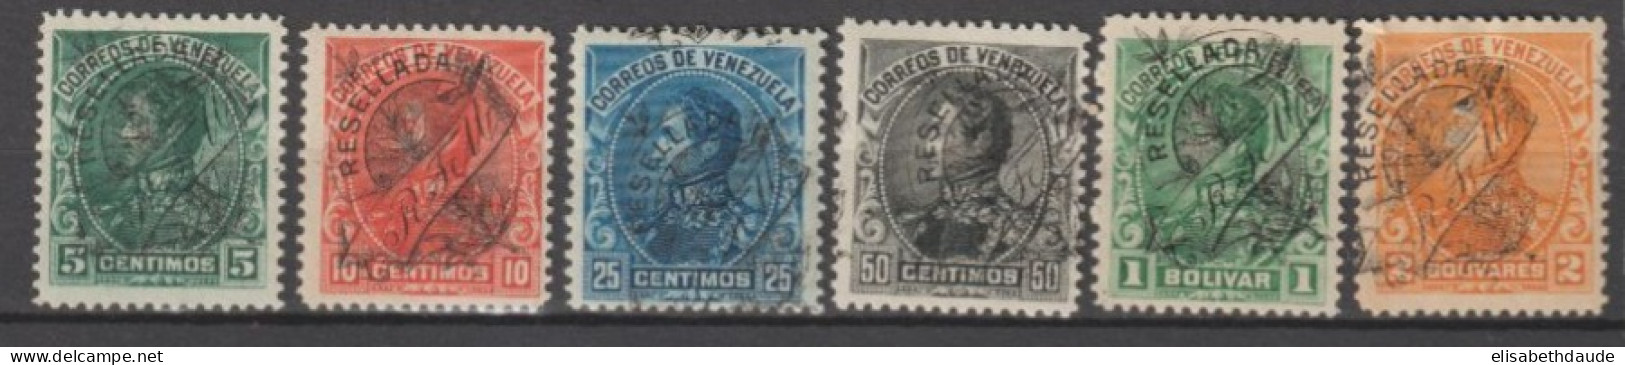 VENEZUELA - 1900 - SERIE COMPLETE YVERT N°65/70 ** MNH (70 * MH)  - COTE = 28 EUR - Venezuela